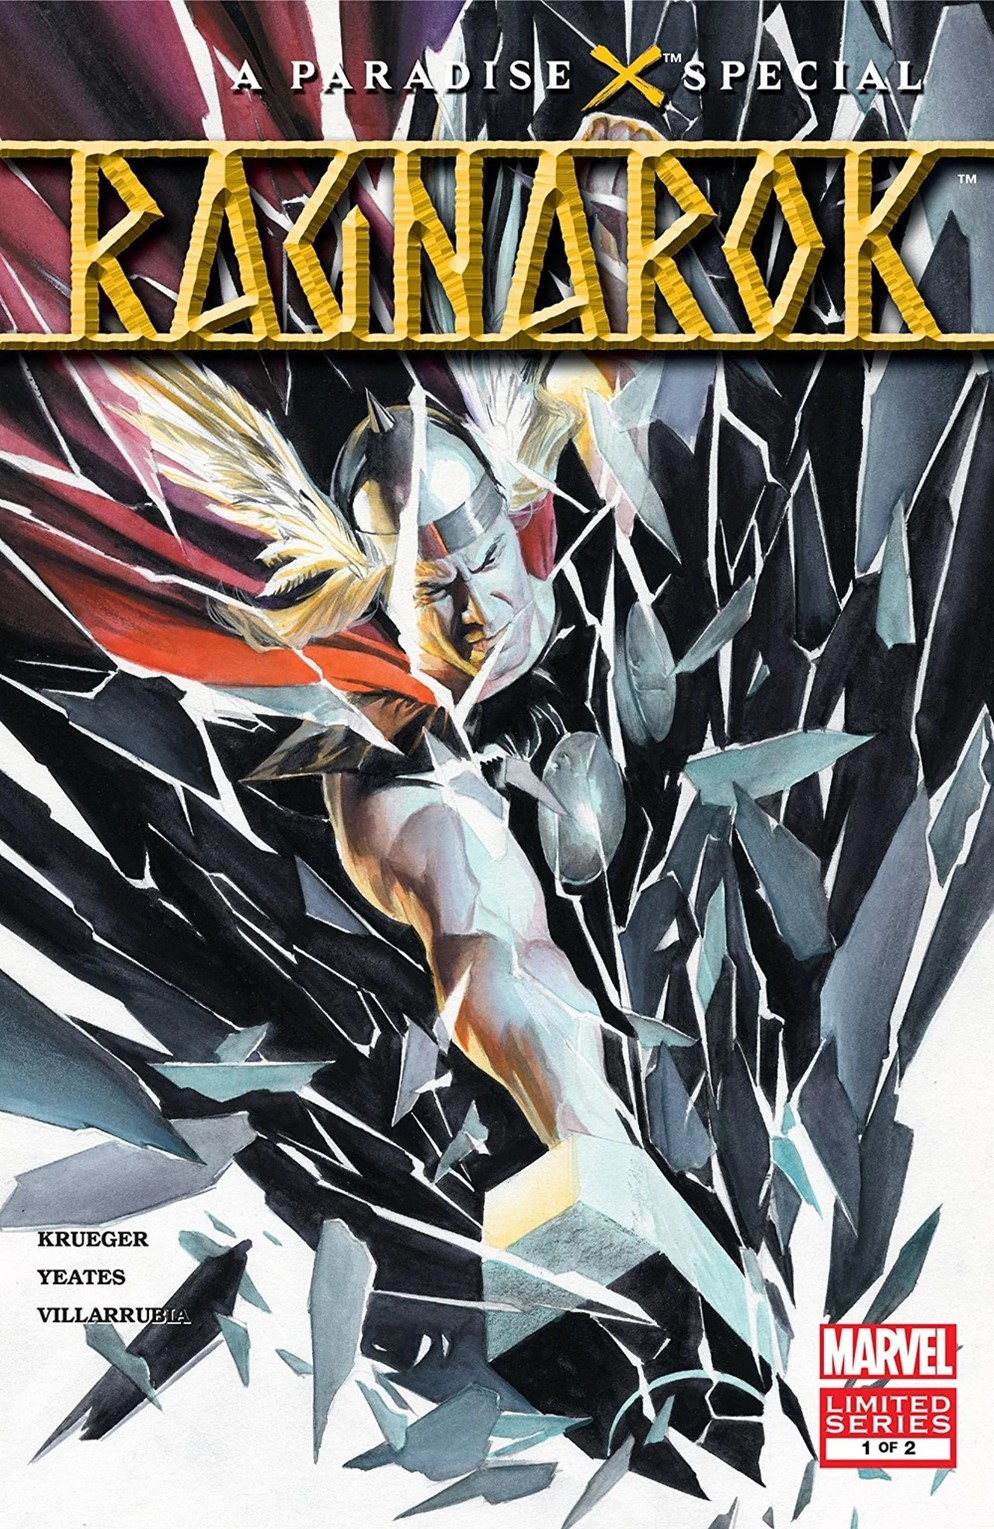 Paradise X: Ragnarok Limited Series Bundle Issues 1-2